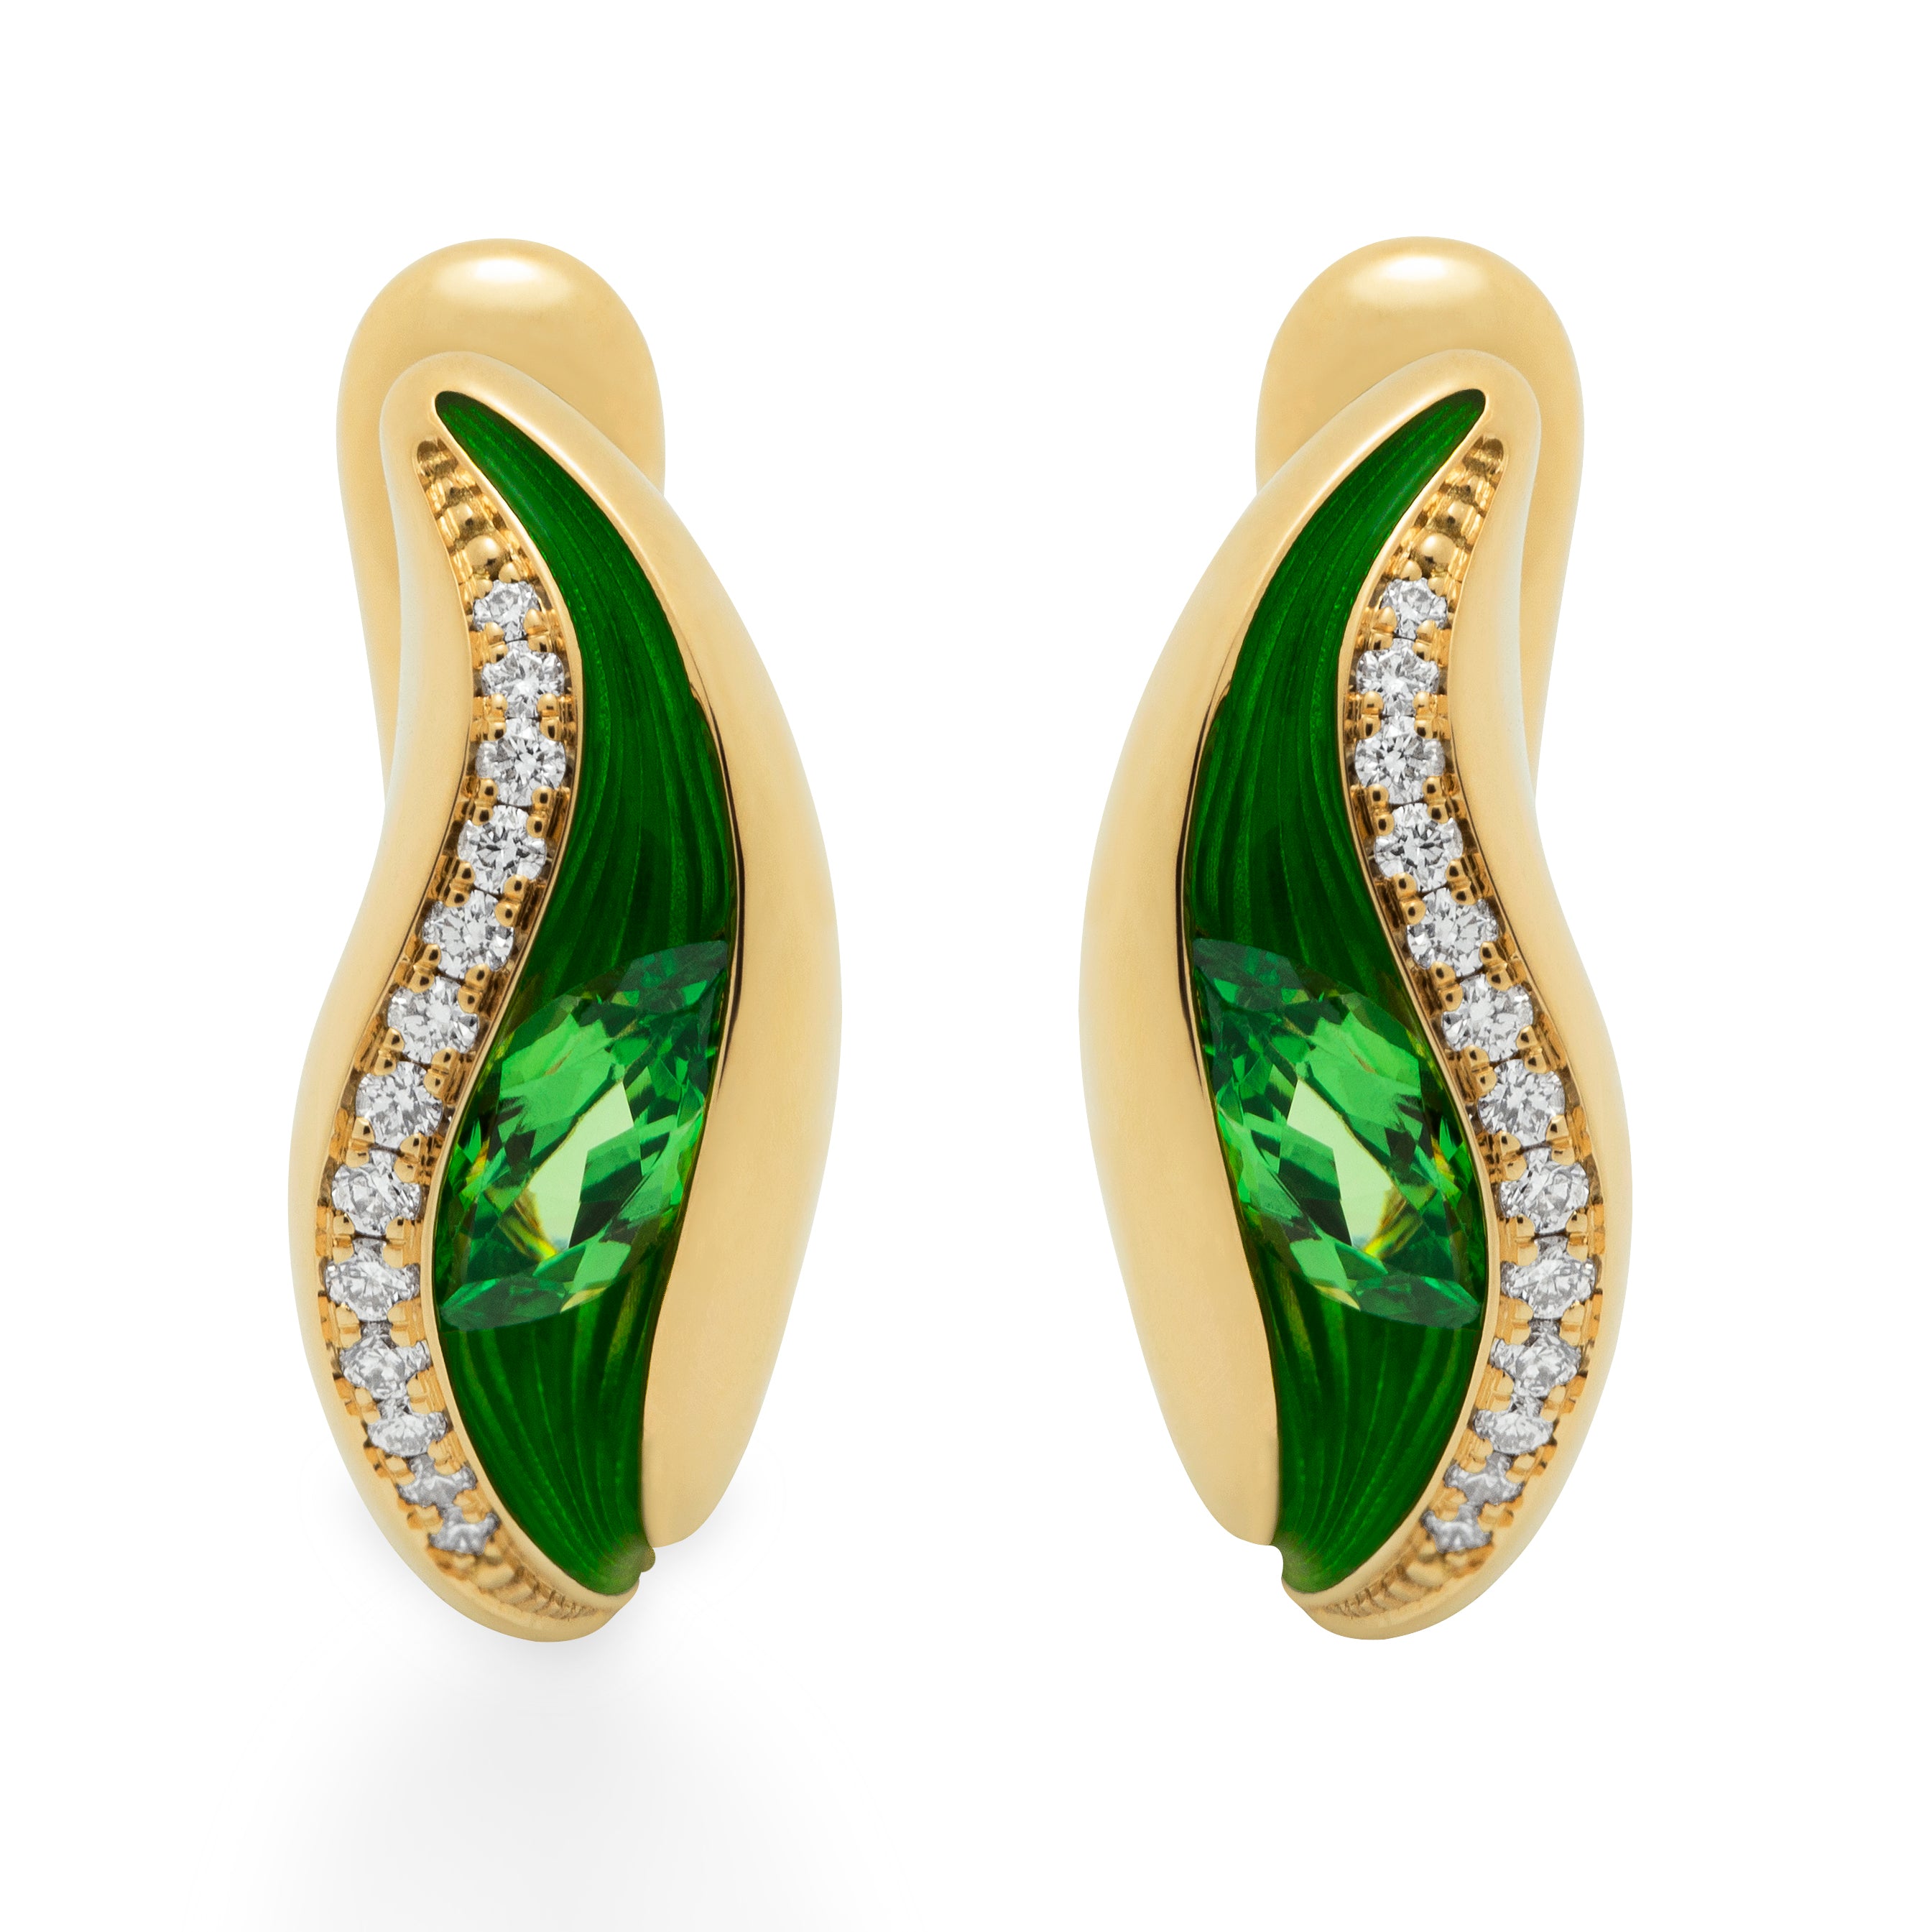 E 0123-80, 18K Yellow Gold, Enamel, Tsavorite Garnet, Diamonds Earrings